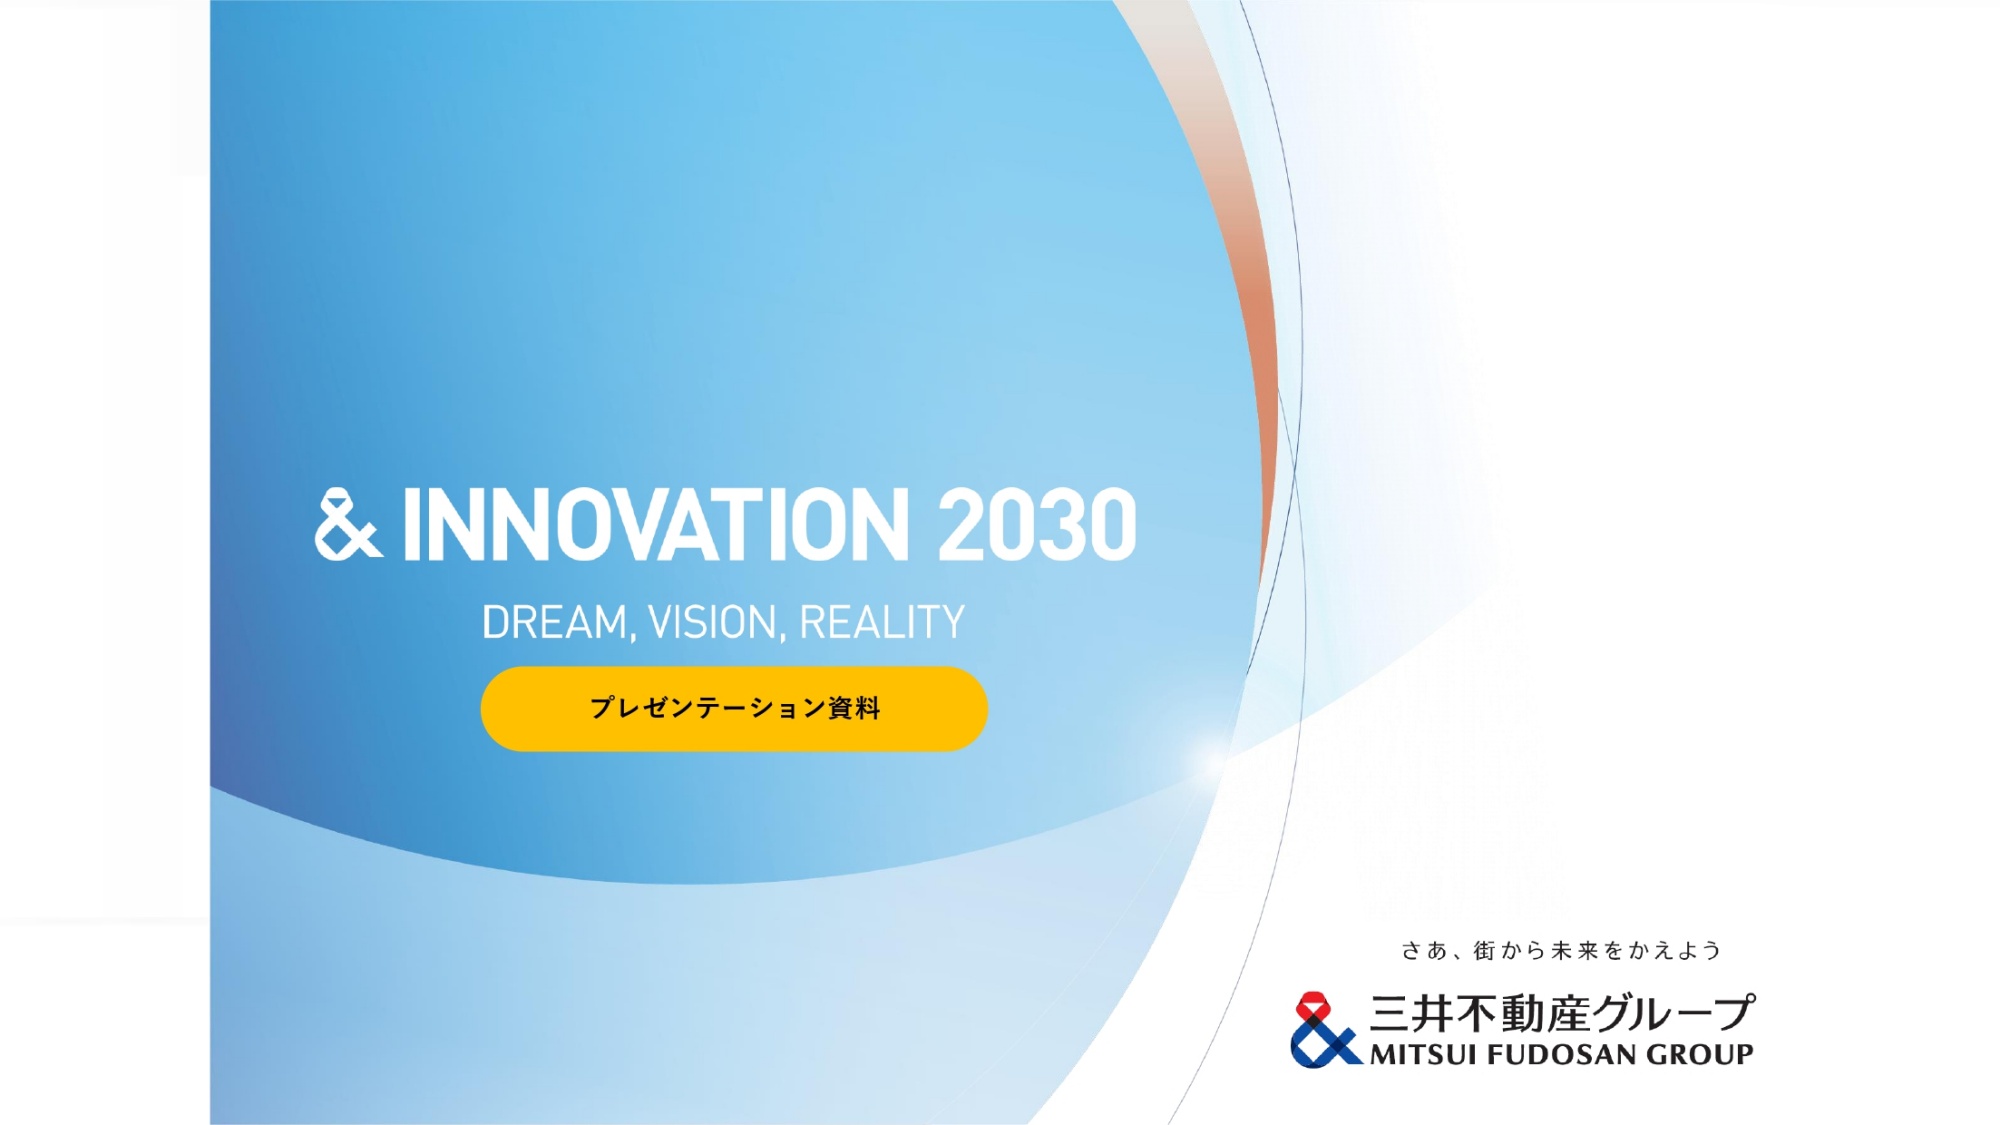 【QAあり】三井不動産、社会に対する新たな付加価値創出を目指し、新グループ長期経営方針「＆ INNOVATION 2030」を策定